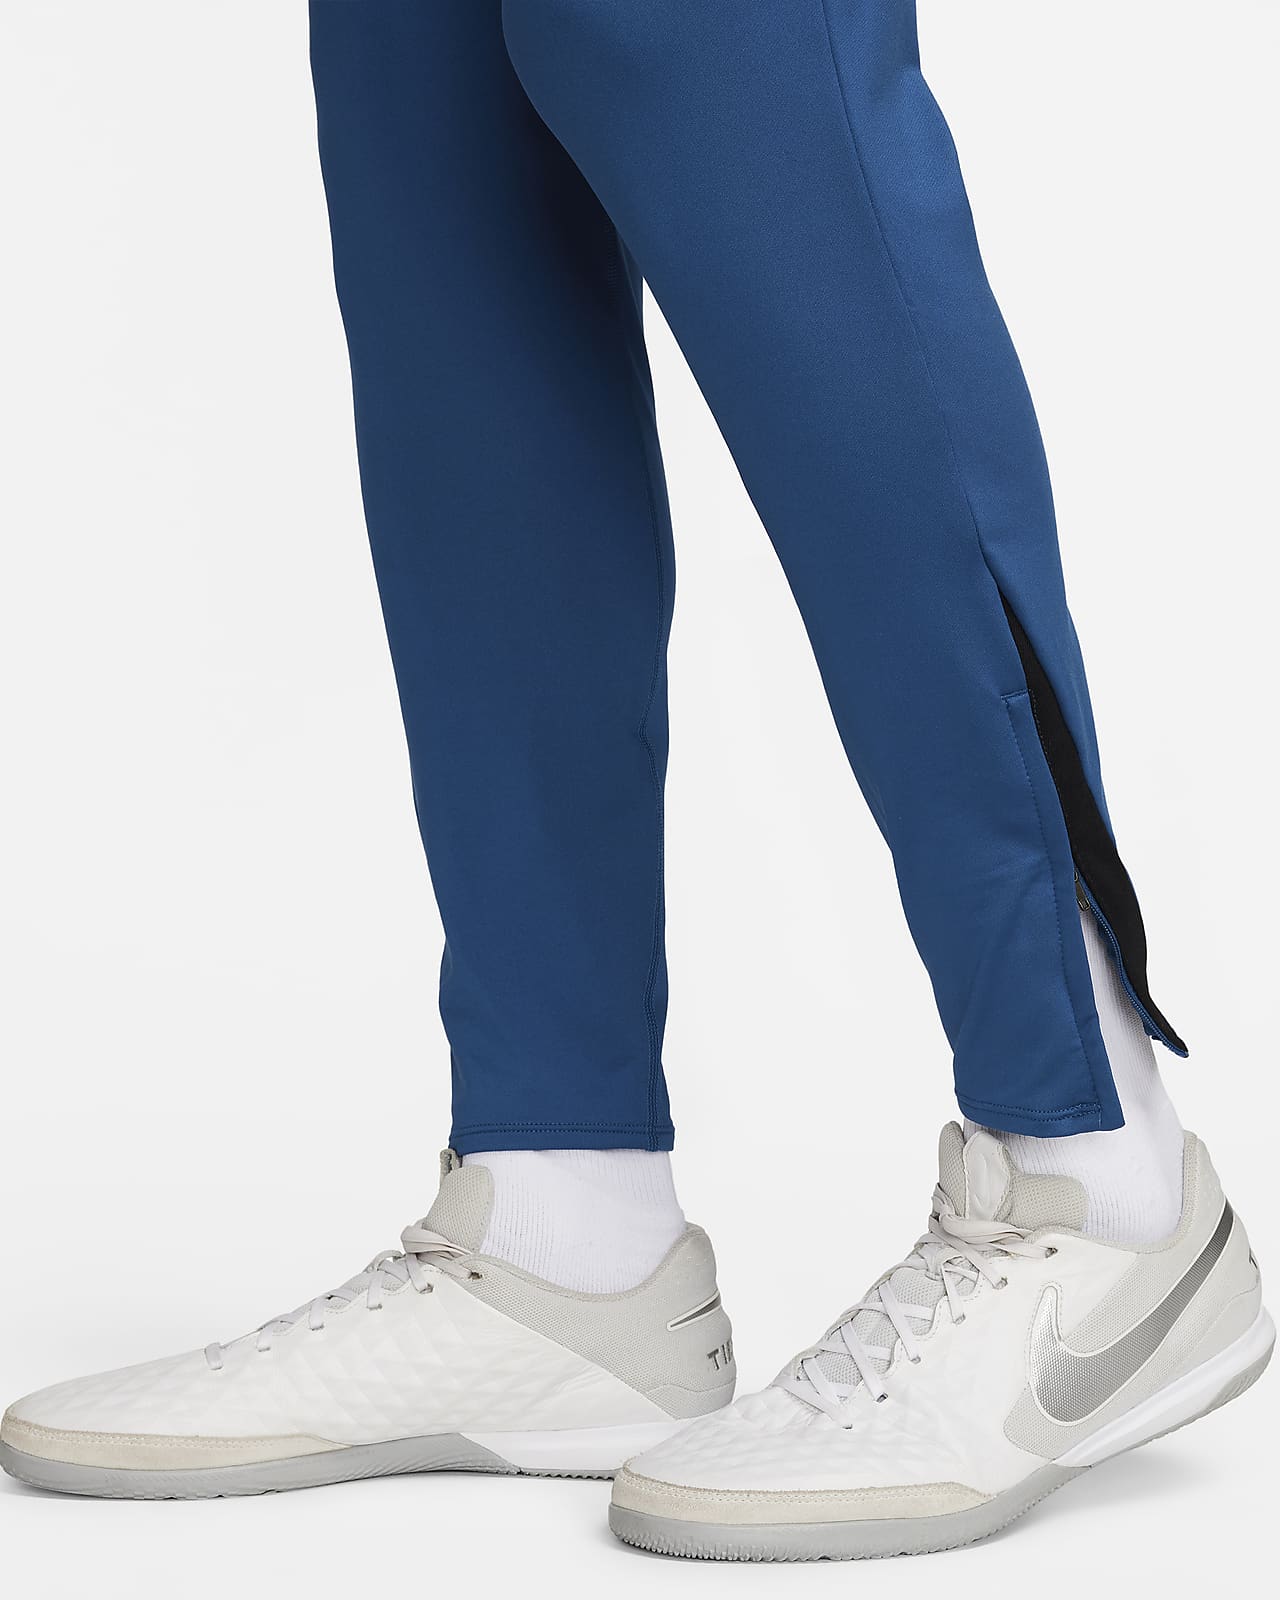 Mens Nike Dri Fit Slim Fit Pants Futbol Soccer Joggers Small Blue